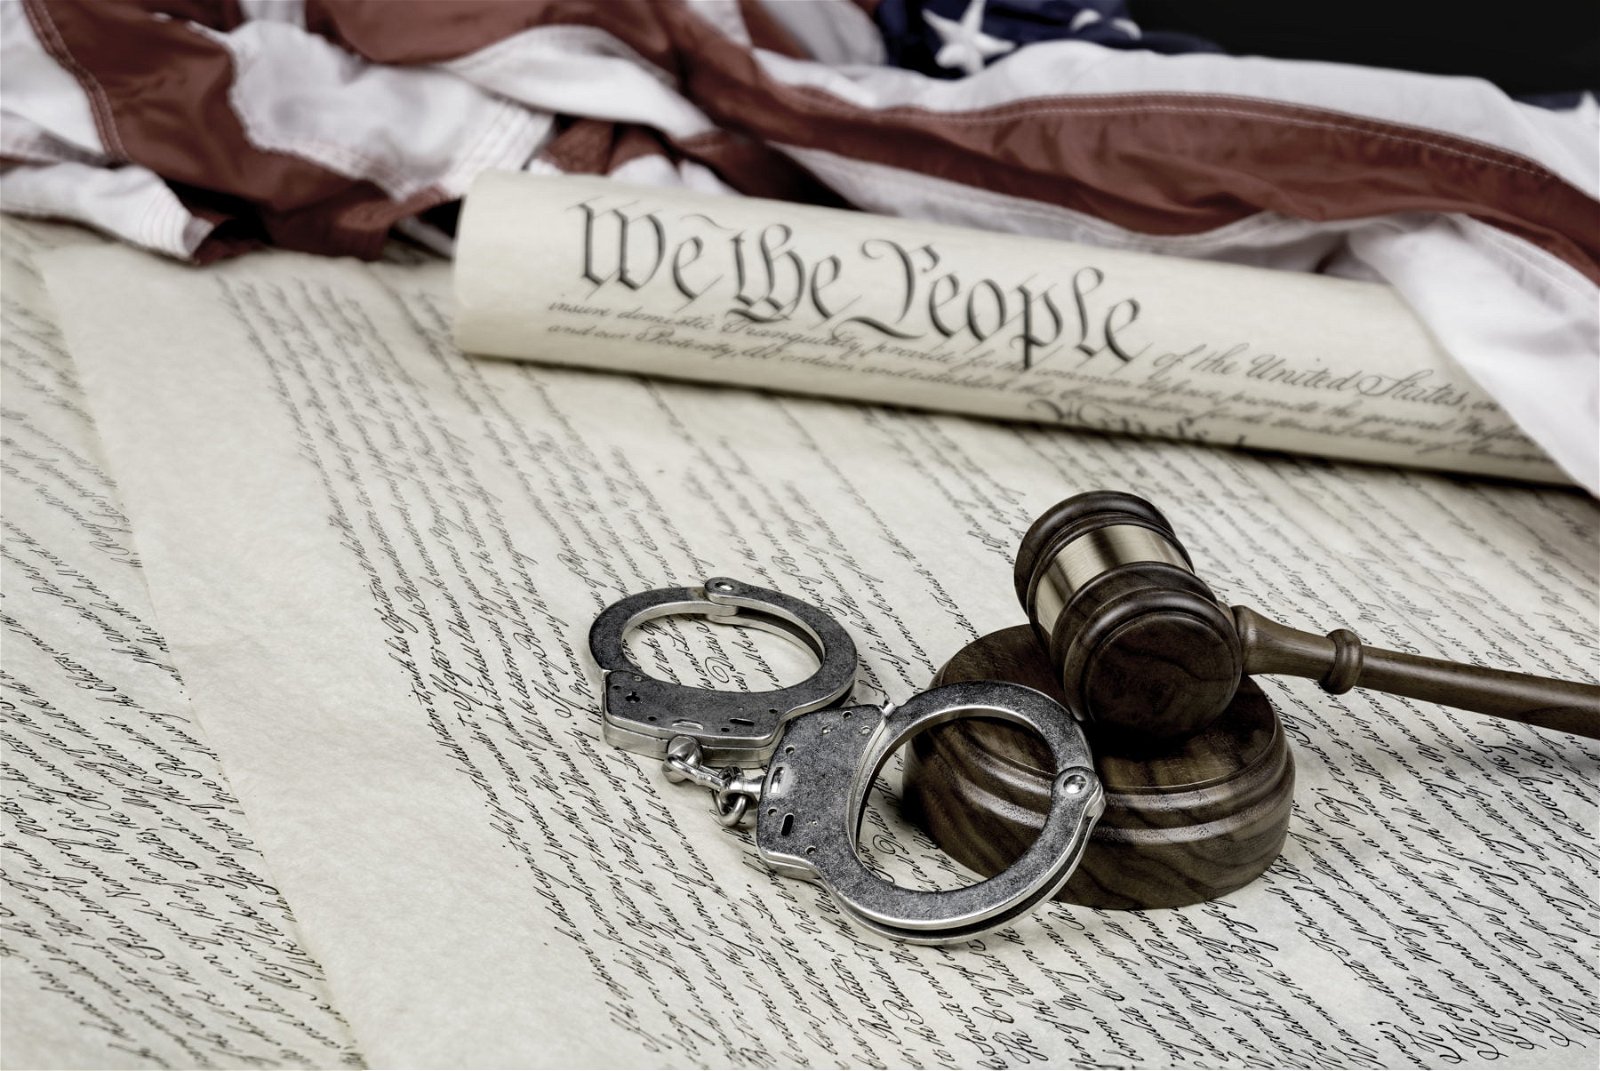 The Sixth Amendment and Eye Witness Identification